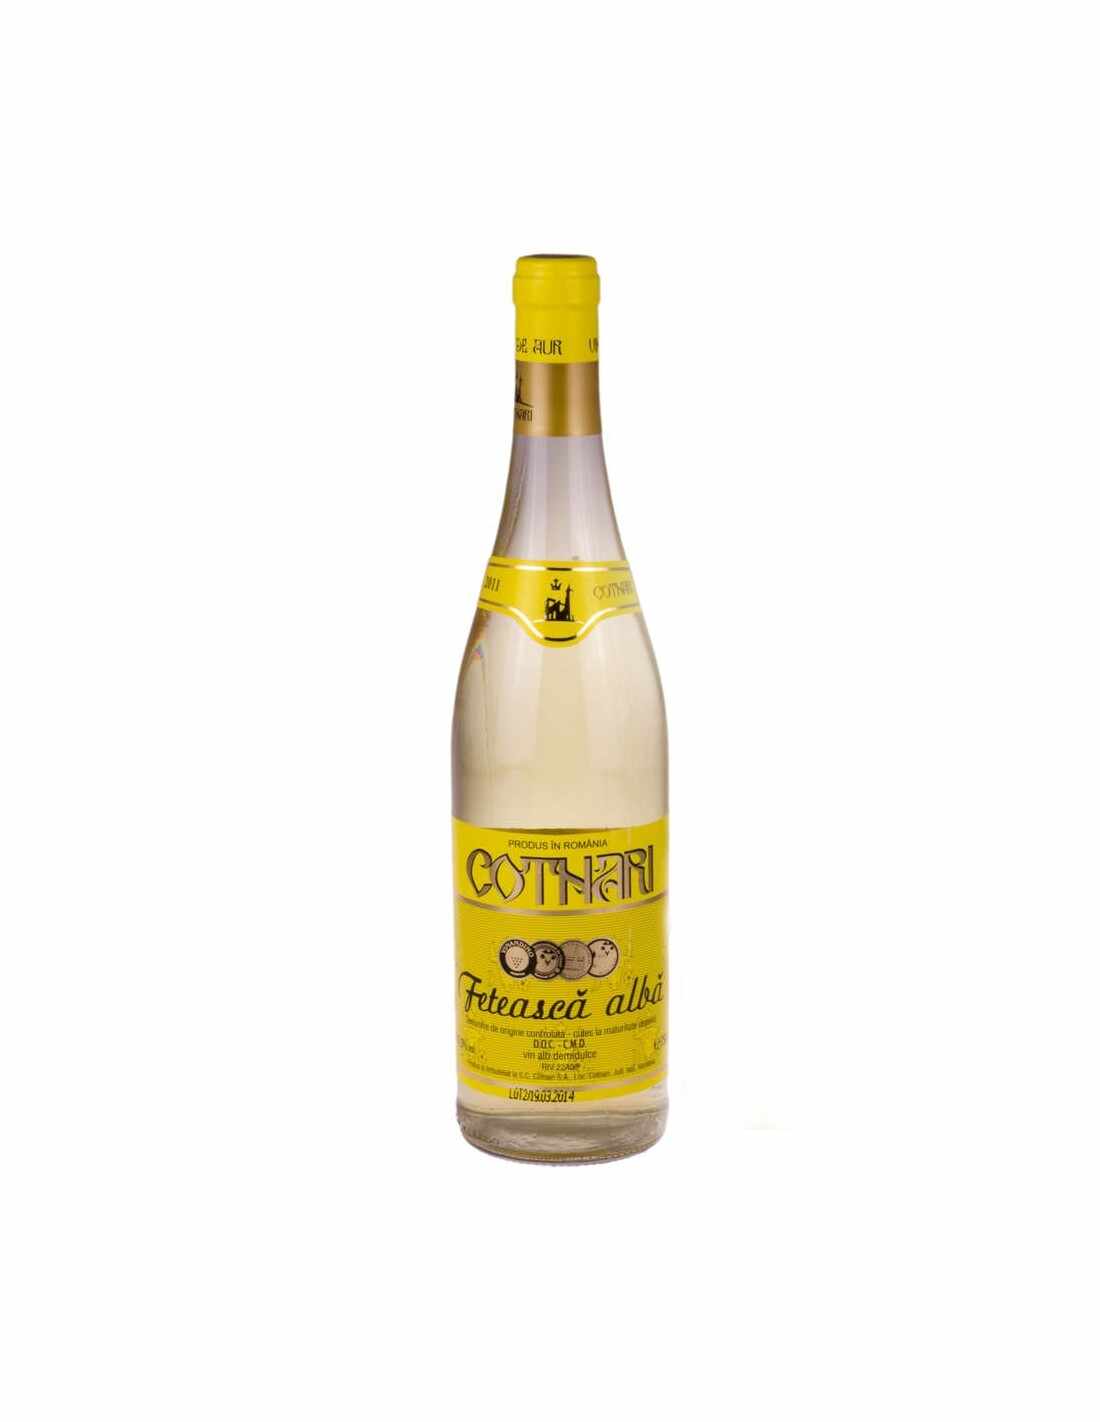 Vin alb demidulce, Feteasca Alba, Cotnari, 0.75L, 11,5% alc., Romania